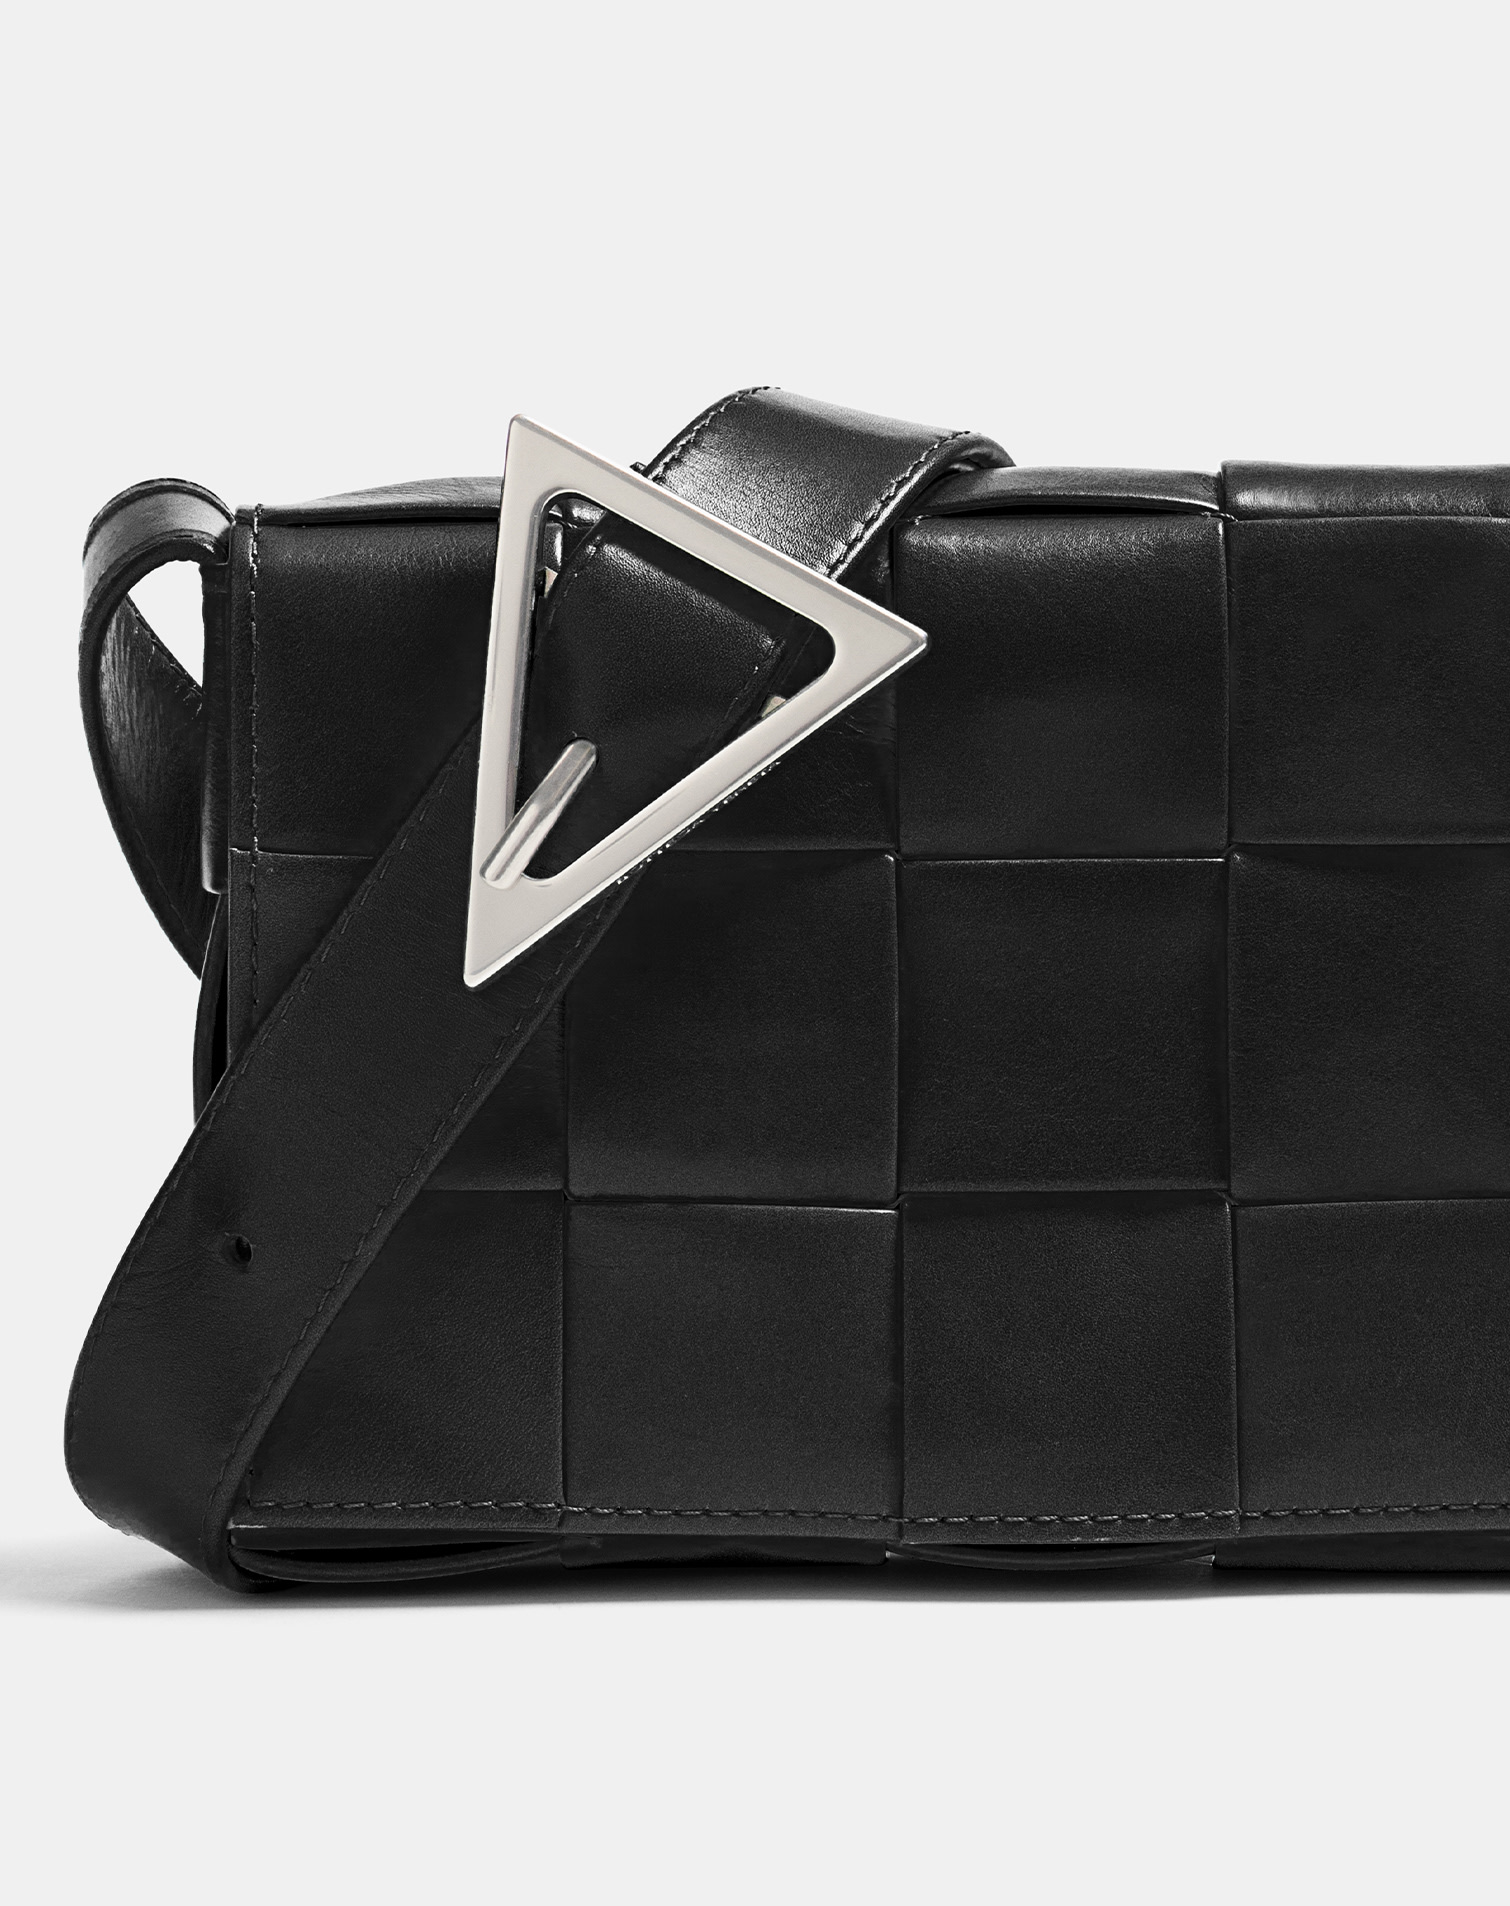 Bottega Veneta Bags: Iconic Models and Trends